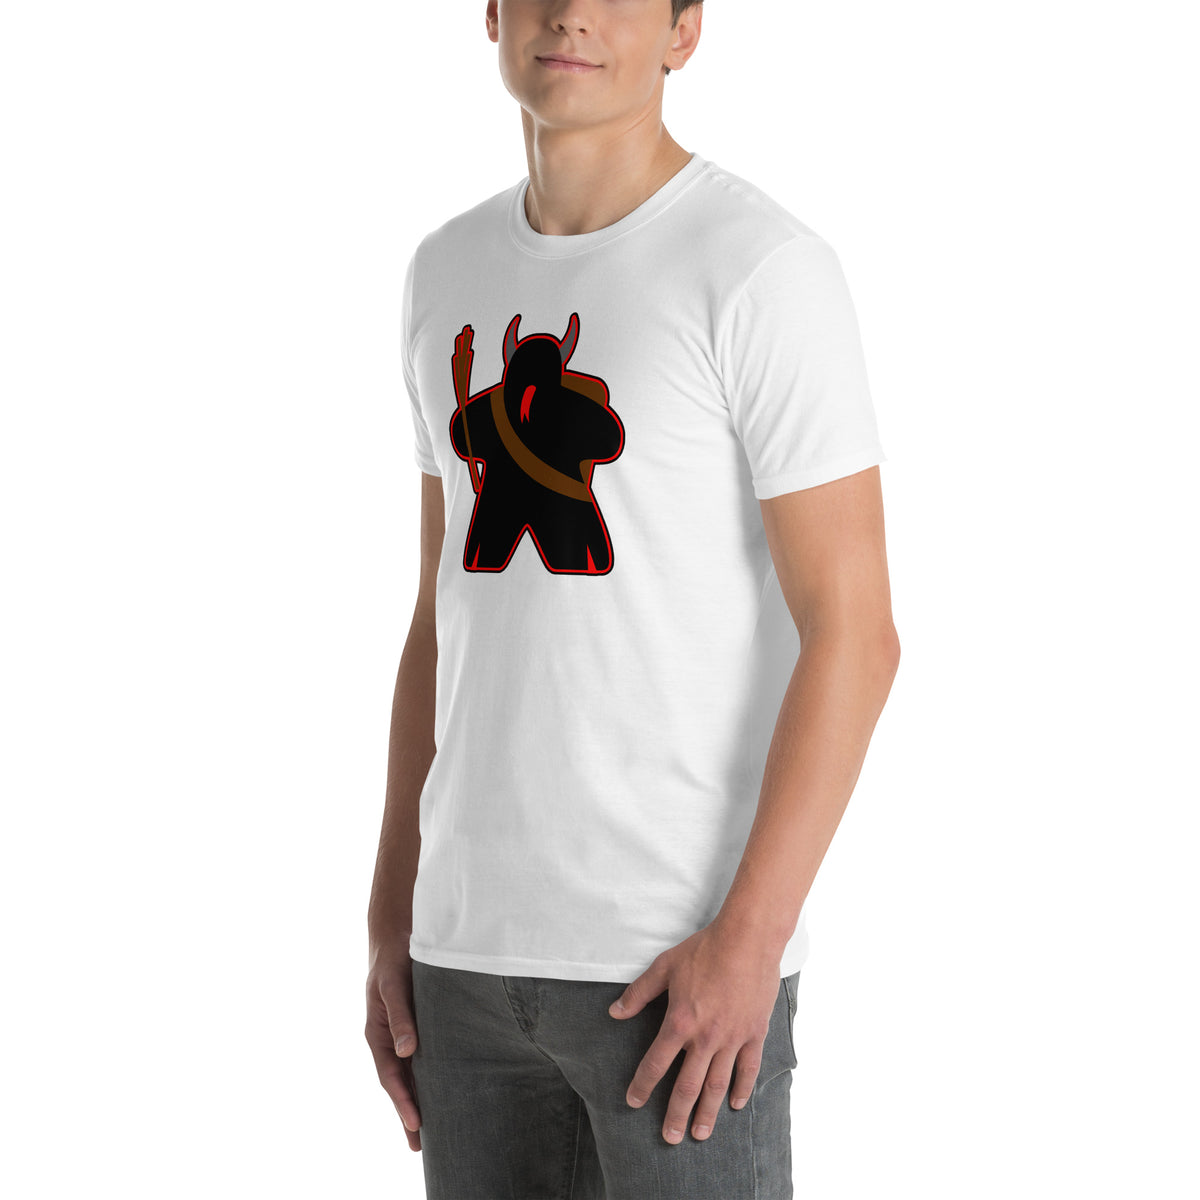 Krampus Meeple on White T-Shirt Worn by Model